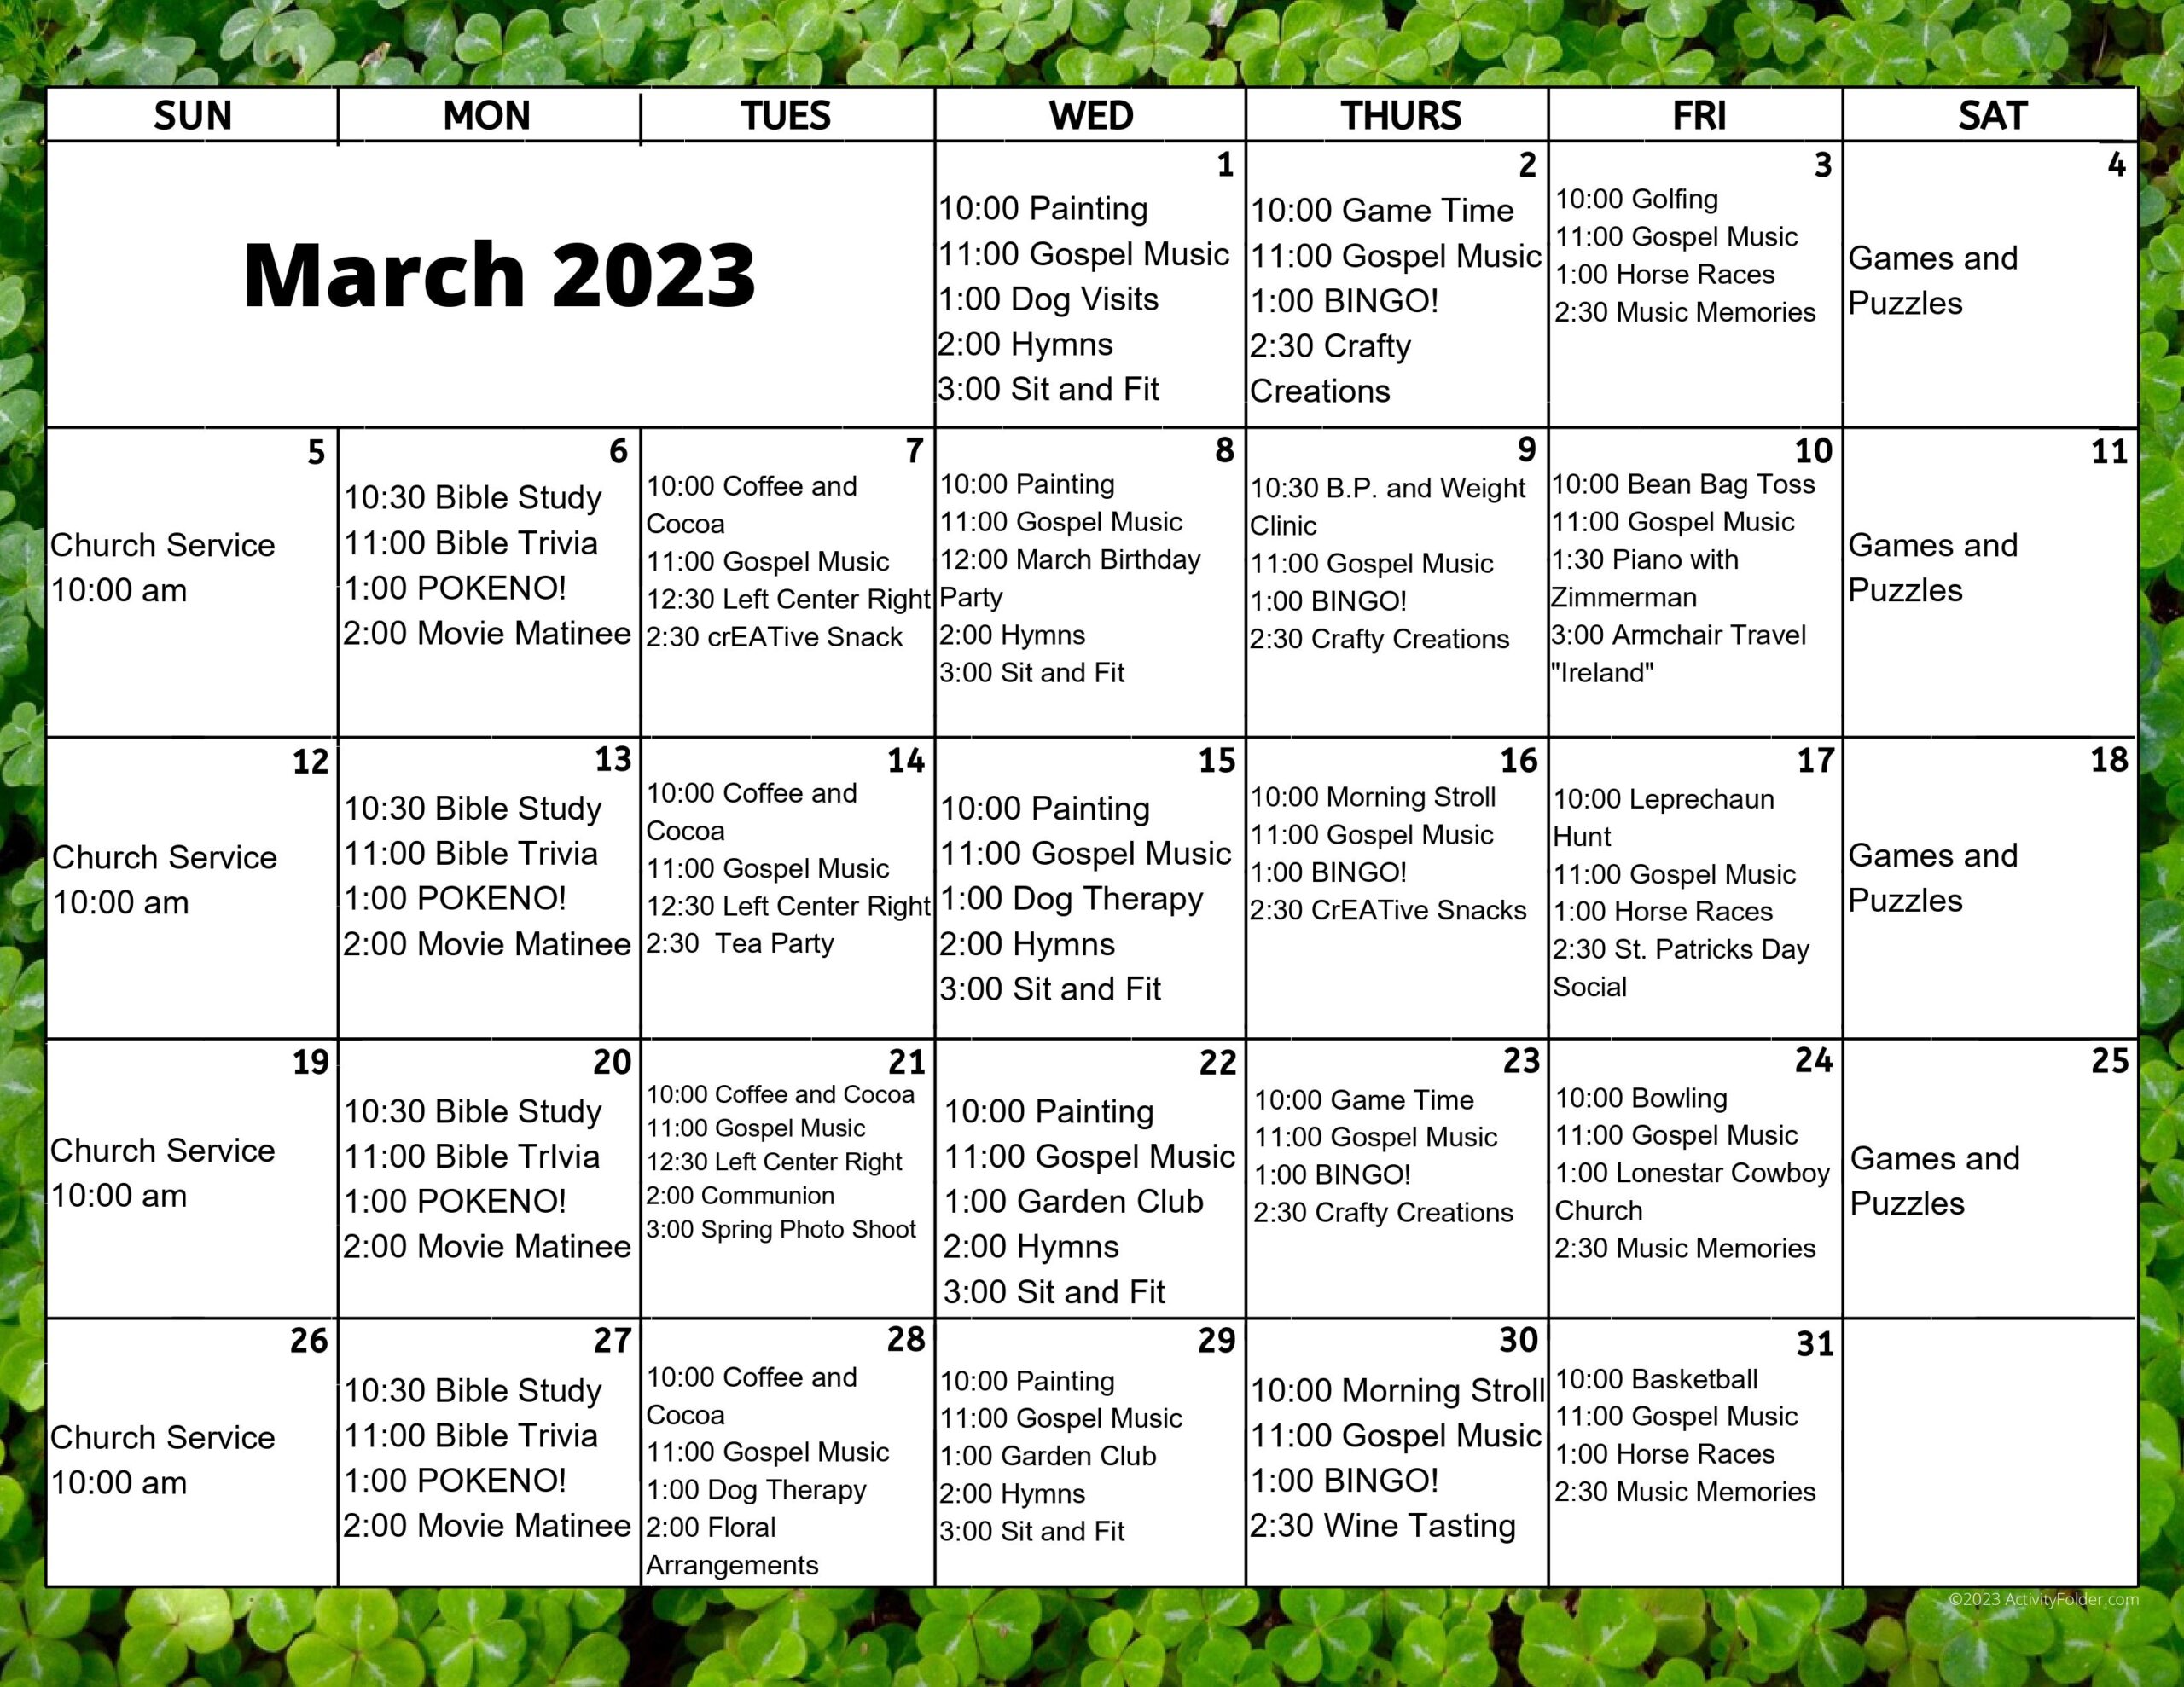 January 2022 Activities